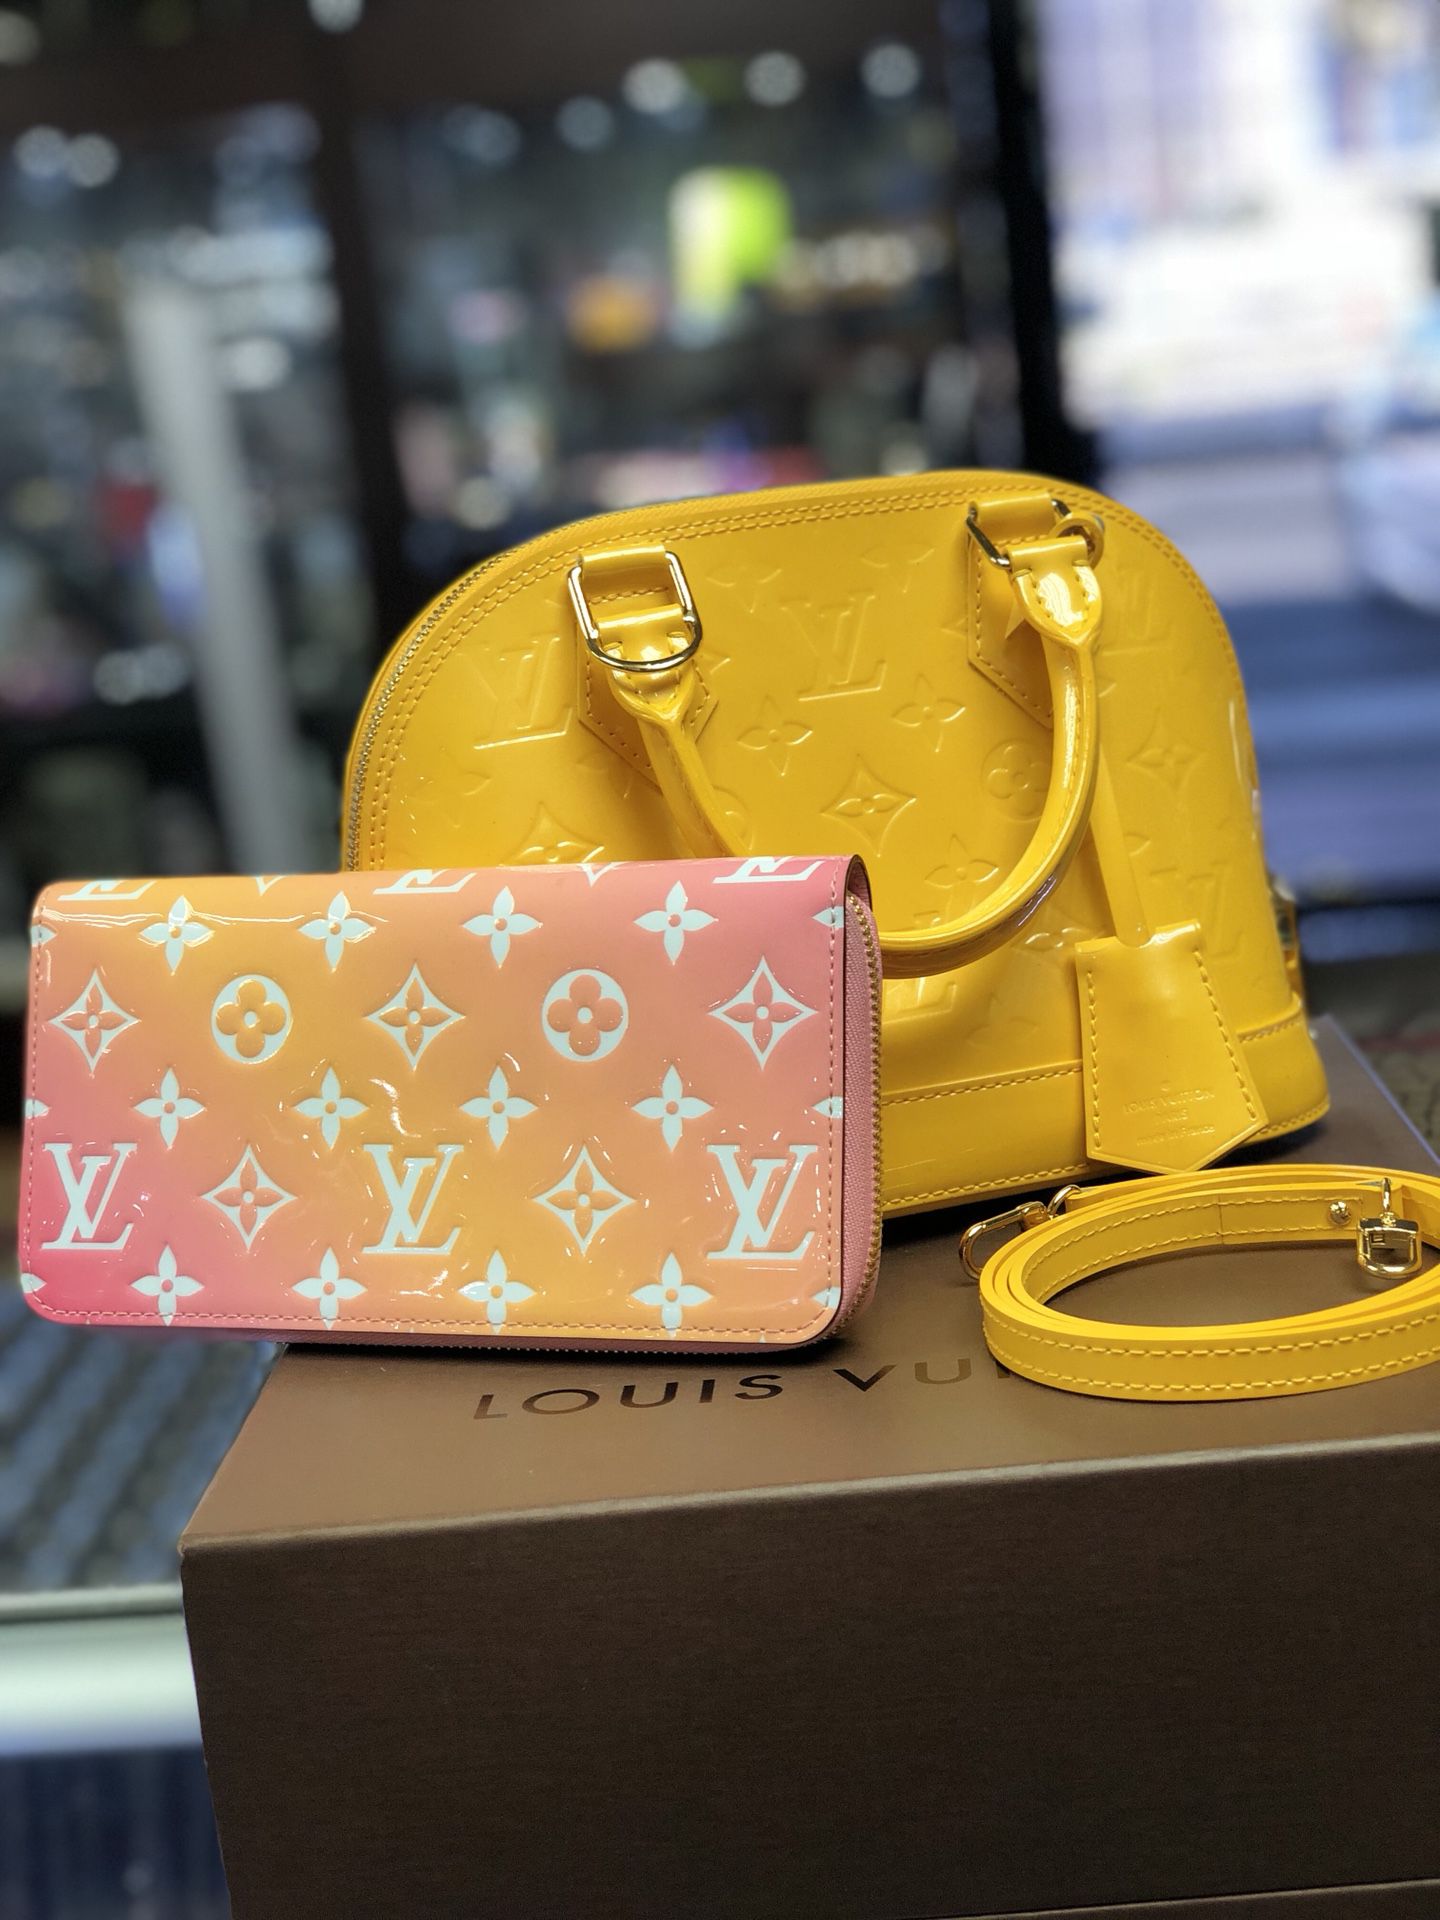 Louis Vuitton Belem MM Handbag in Damier Ebene for Sale in El Dorado Hills,  CA - OfferUp